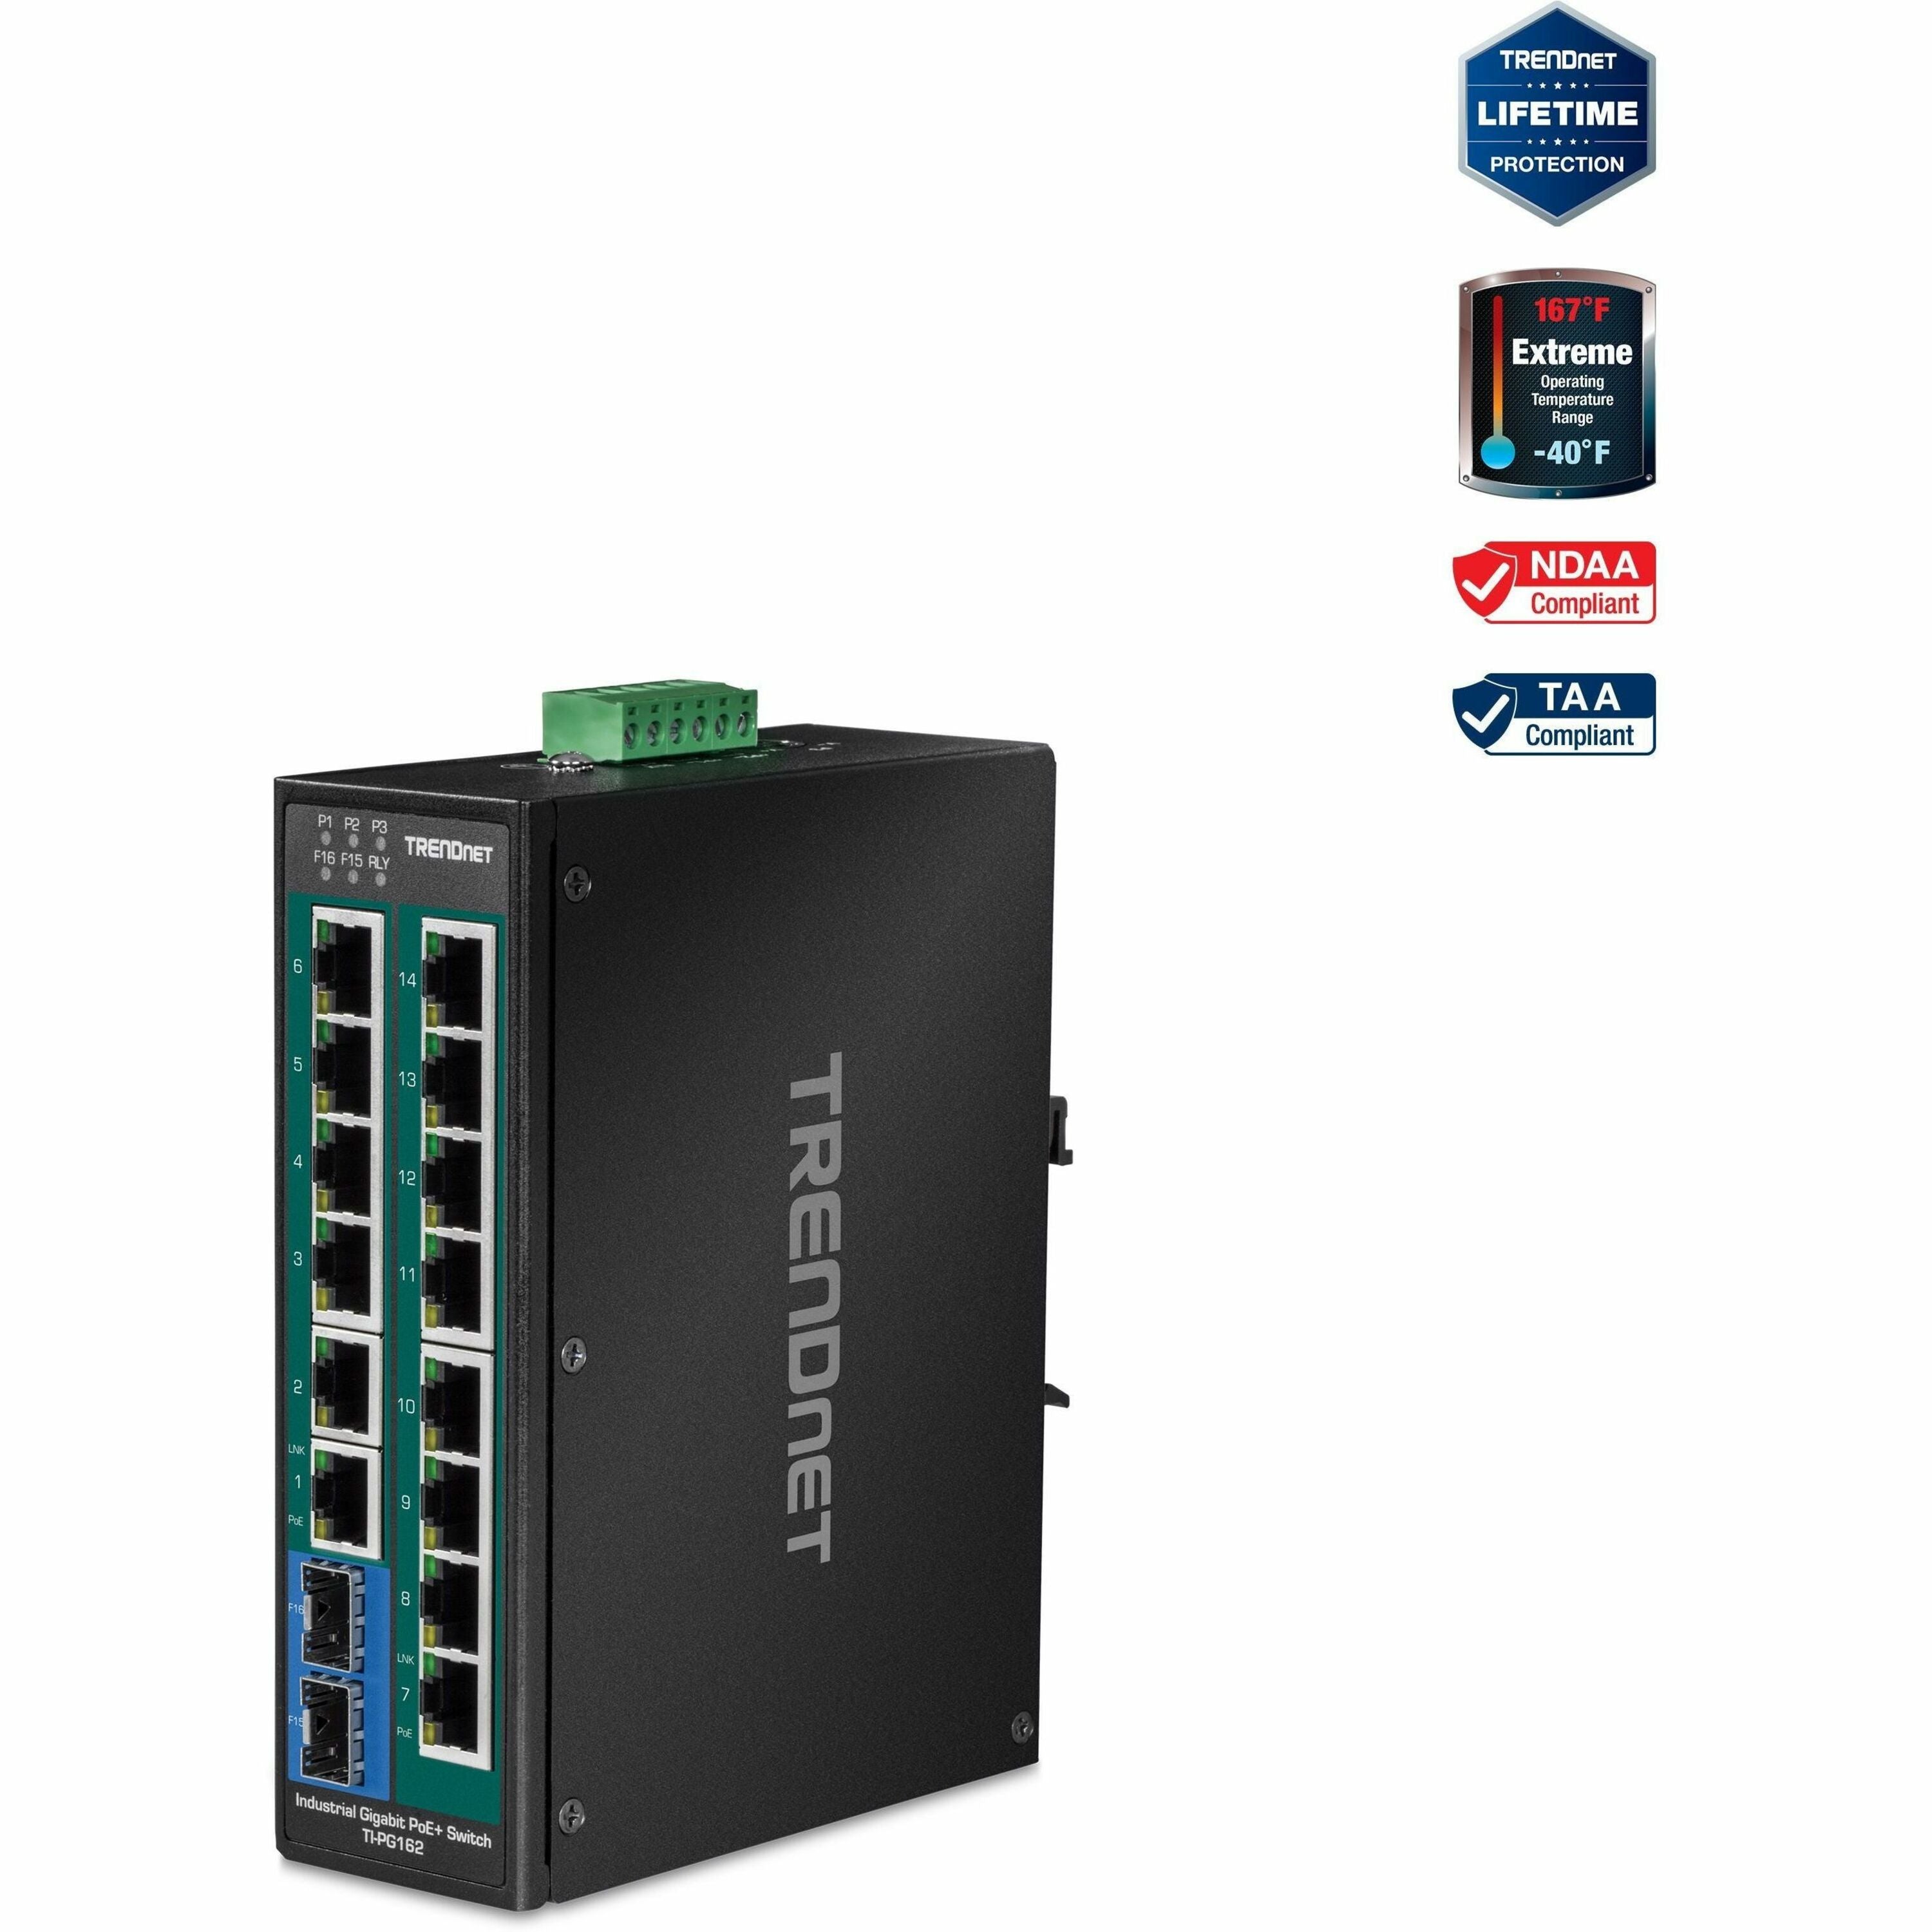 TRENDnet 16-Port Hardened Industrial Unmanaged Gigabit PoE+ DIN-Rail Switch; TI-PG162; 14 x Gigabit Ports; 2 x Gigabit SFP Slots; 32Gbps; IP30 Gigabit Network Ethernet Switch; Lifetime Protection - TI-PG162